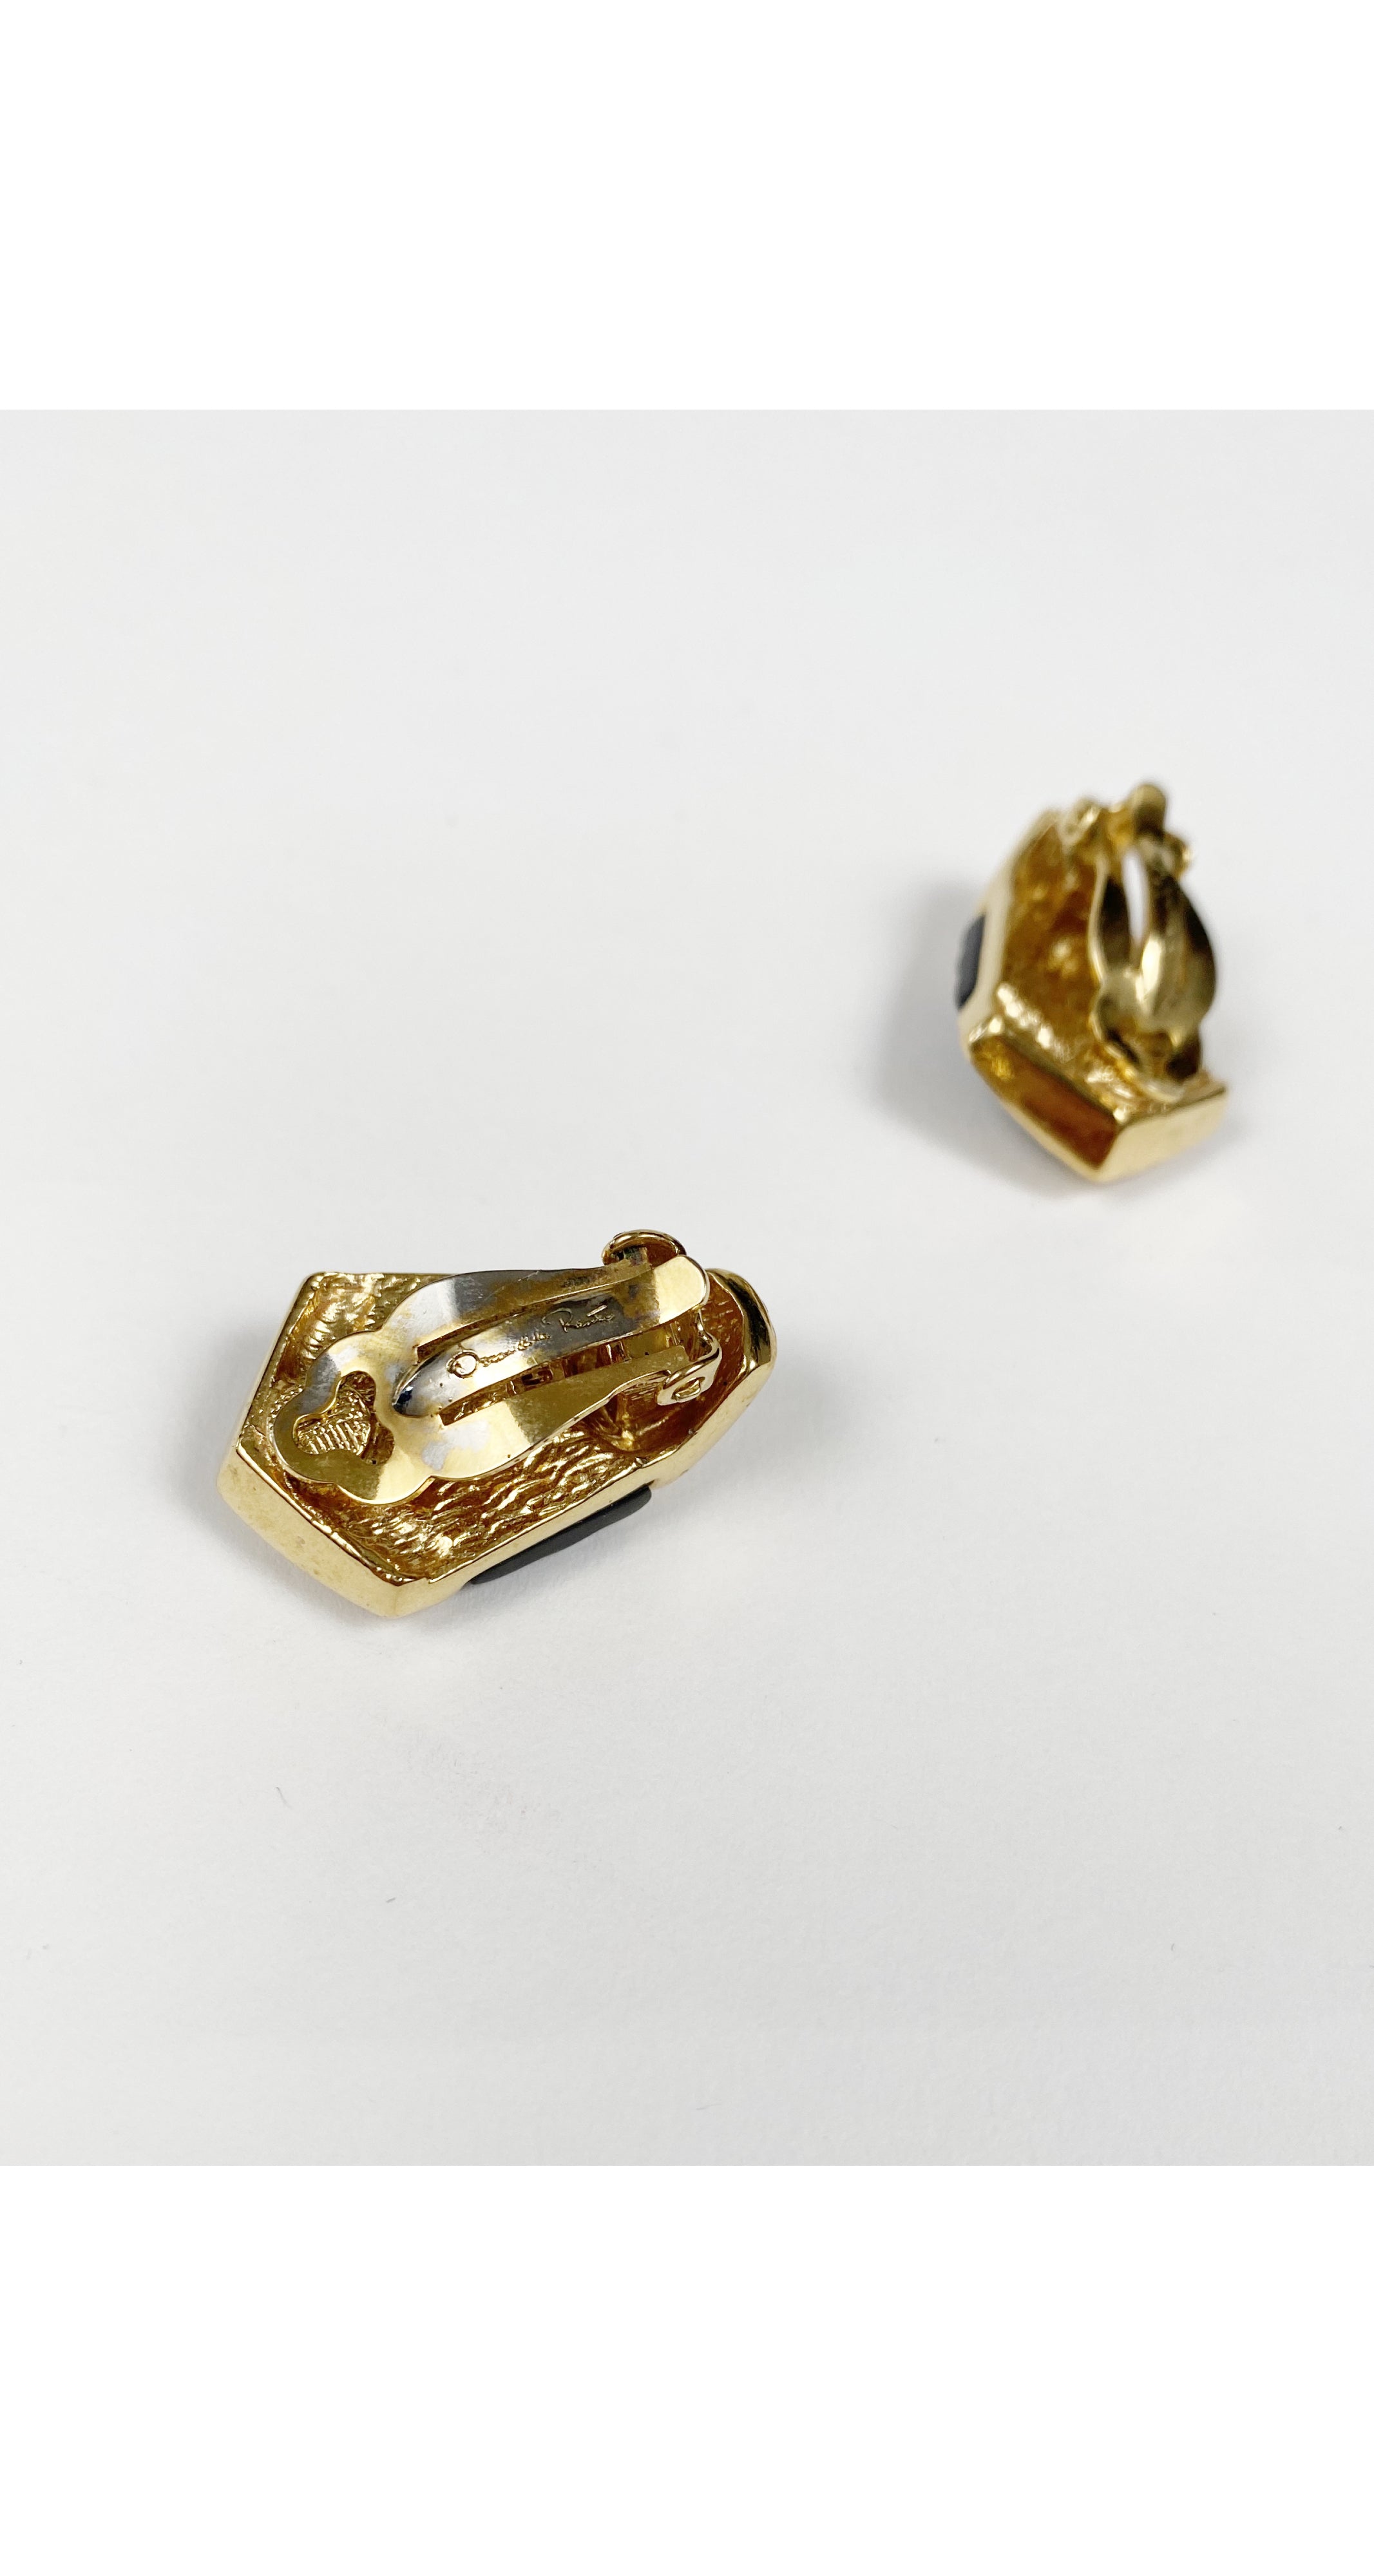 1980s Rhinestone Black & Gold Clip-On Earrings